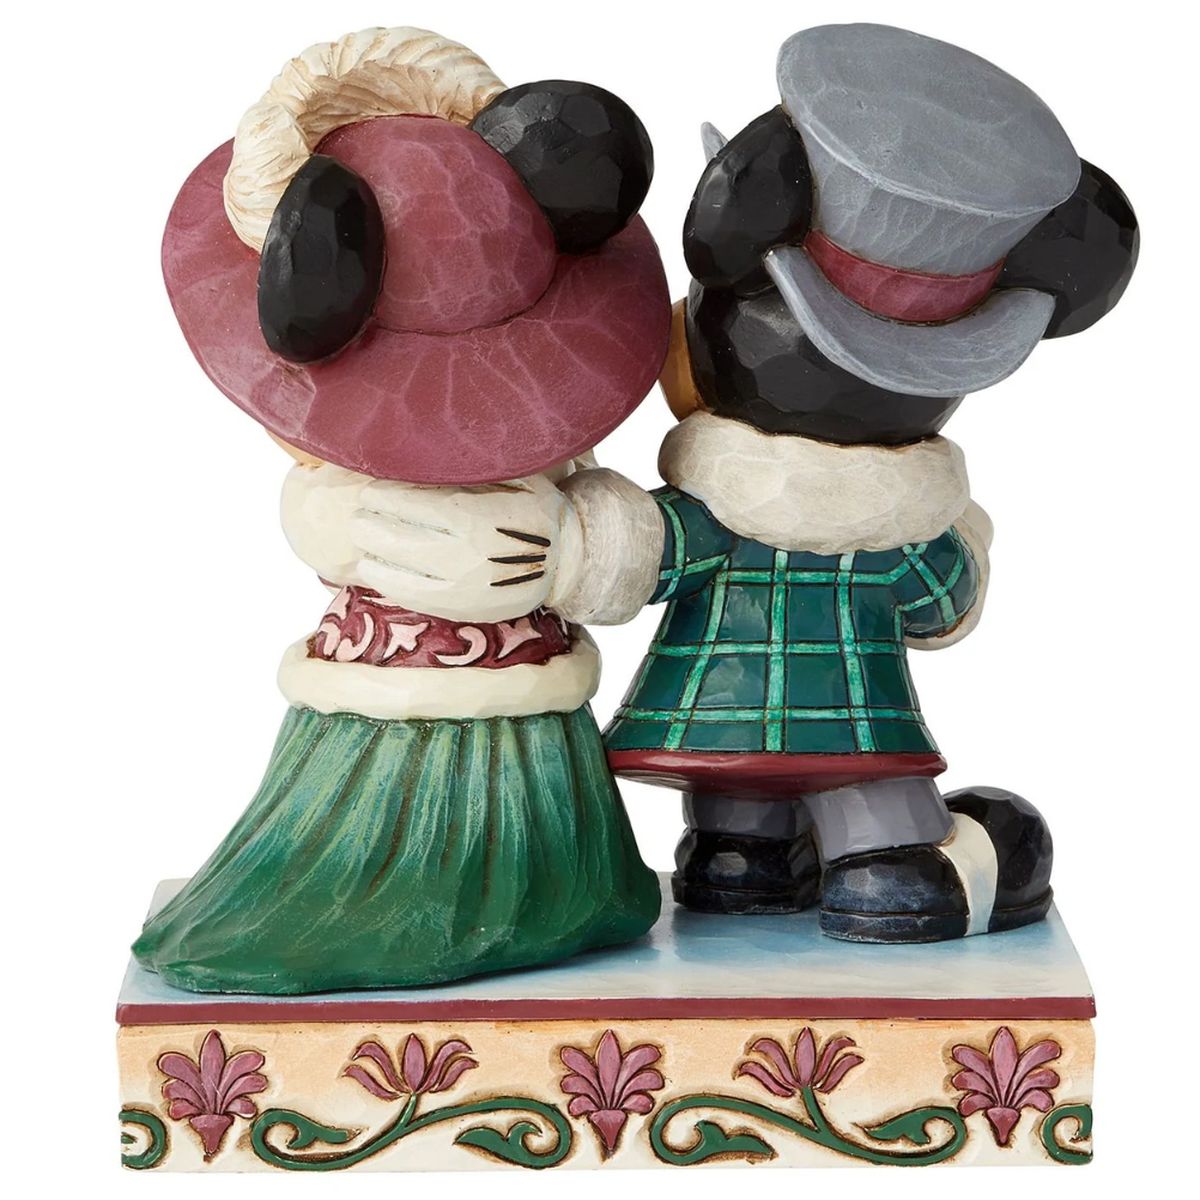 Elegant Excursion - Mickey and Minnie Figurine